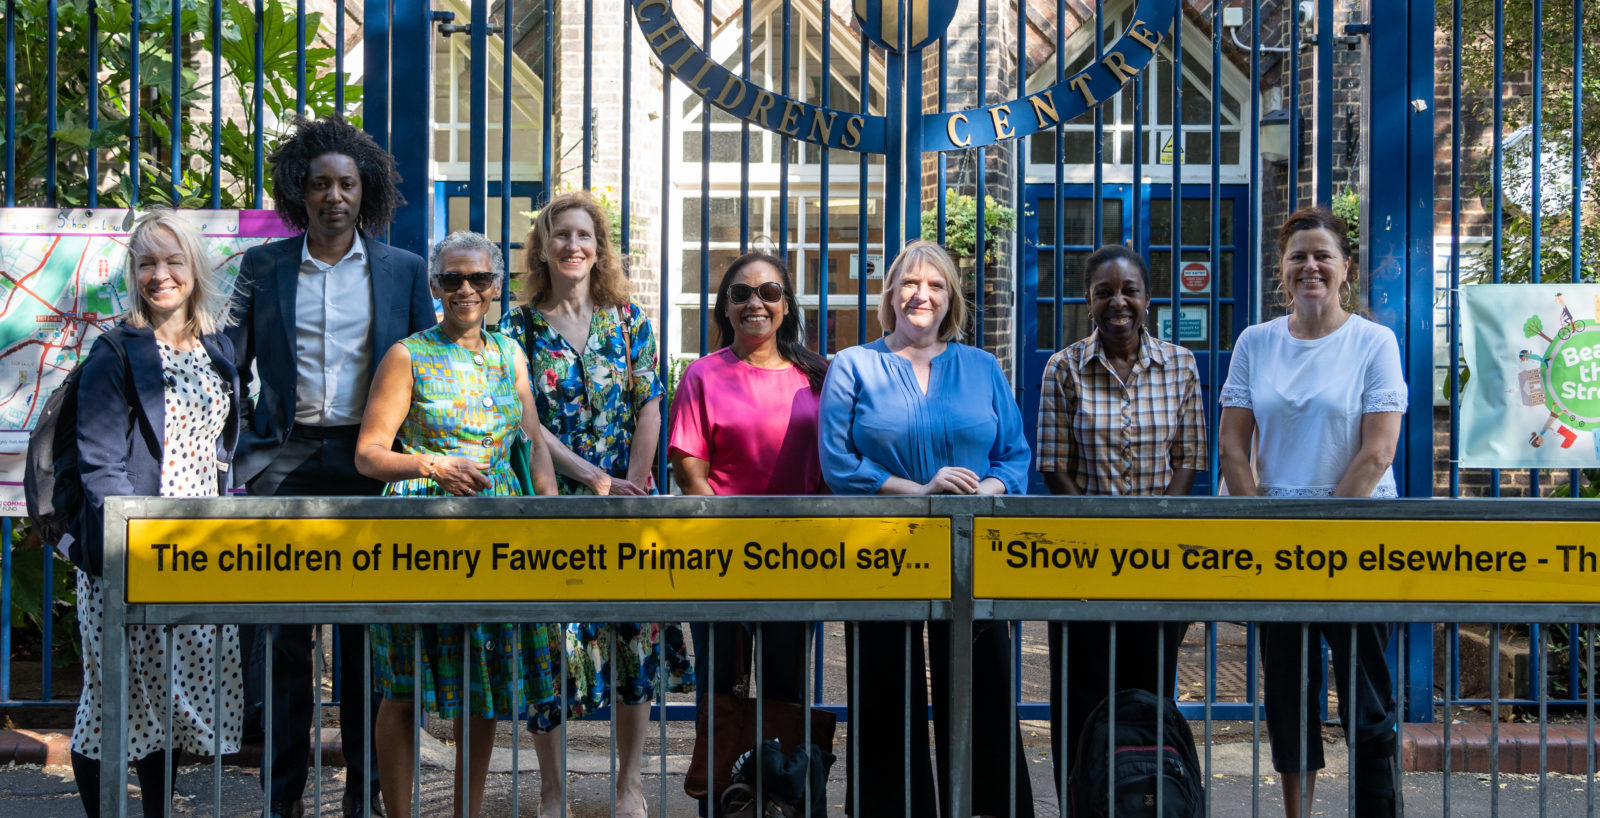 Henry Fawcett Primary School